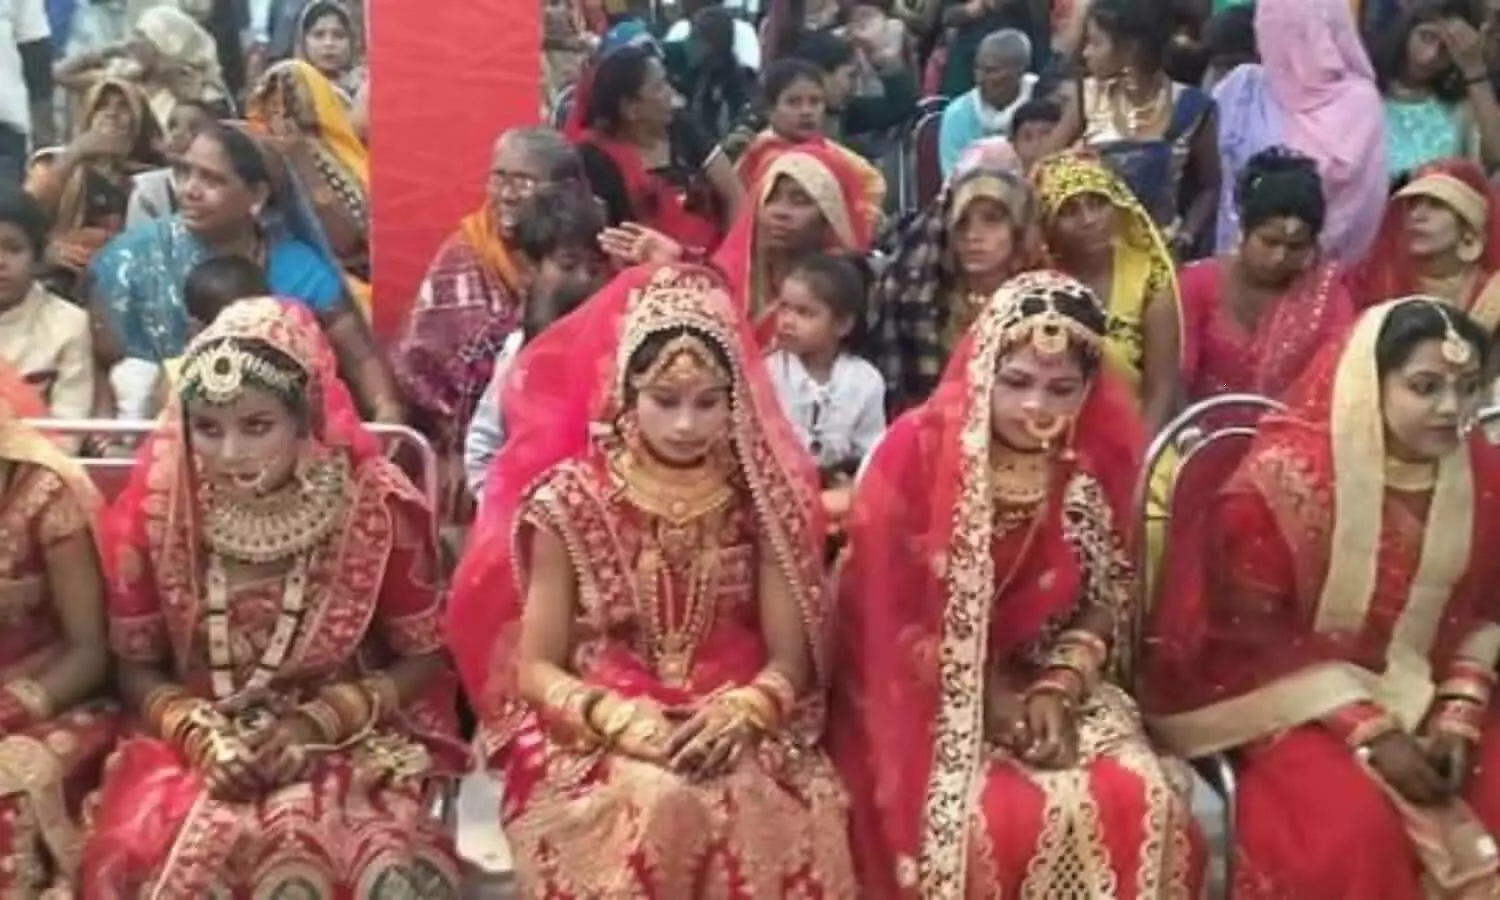 Banda news Sudarshan Samaj gave the message of simplicity through mass marriage